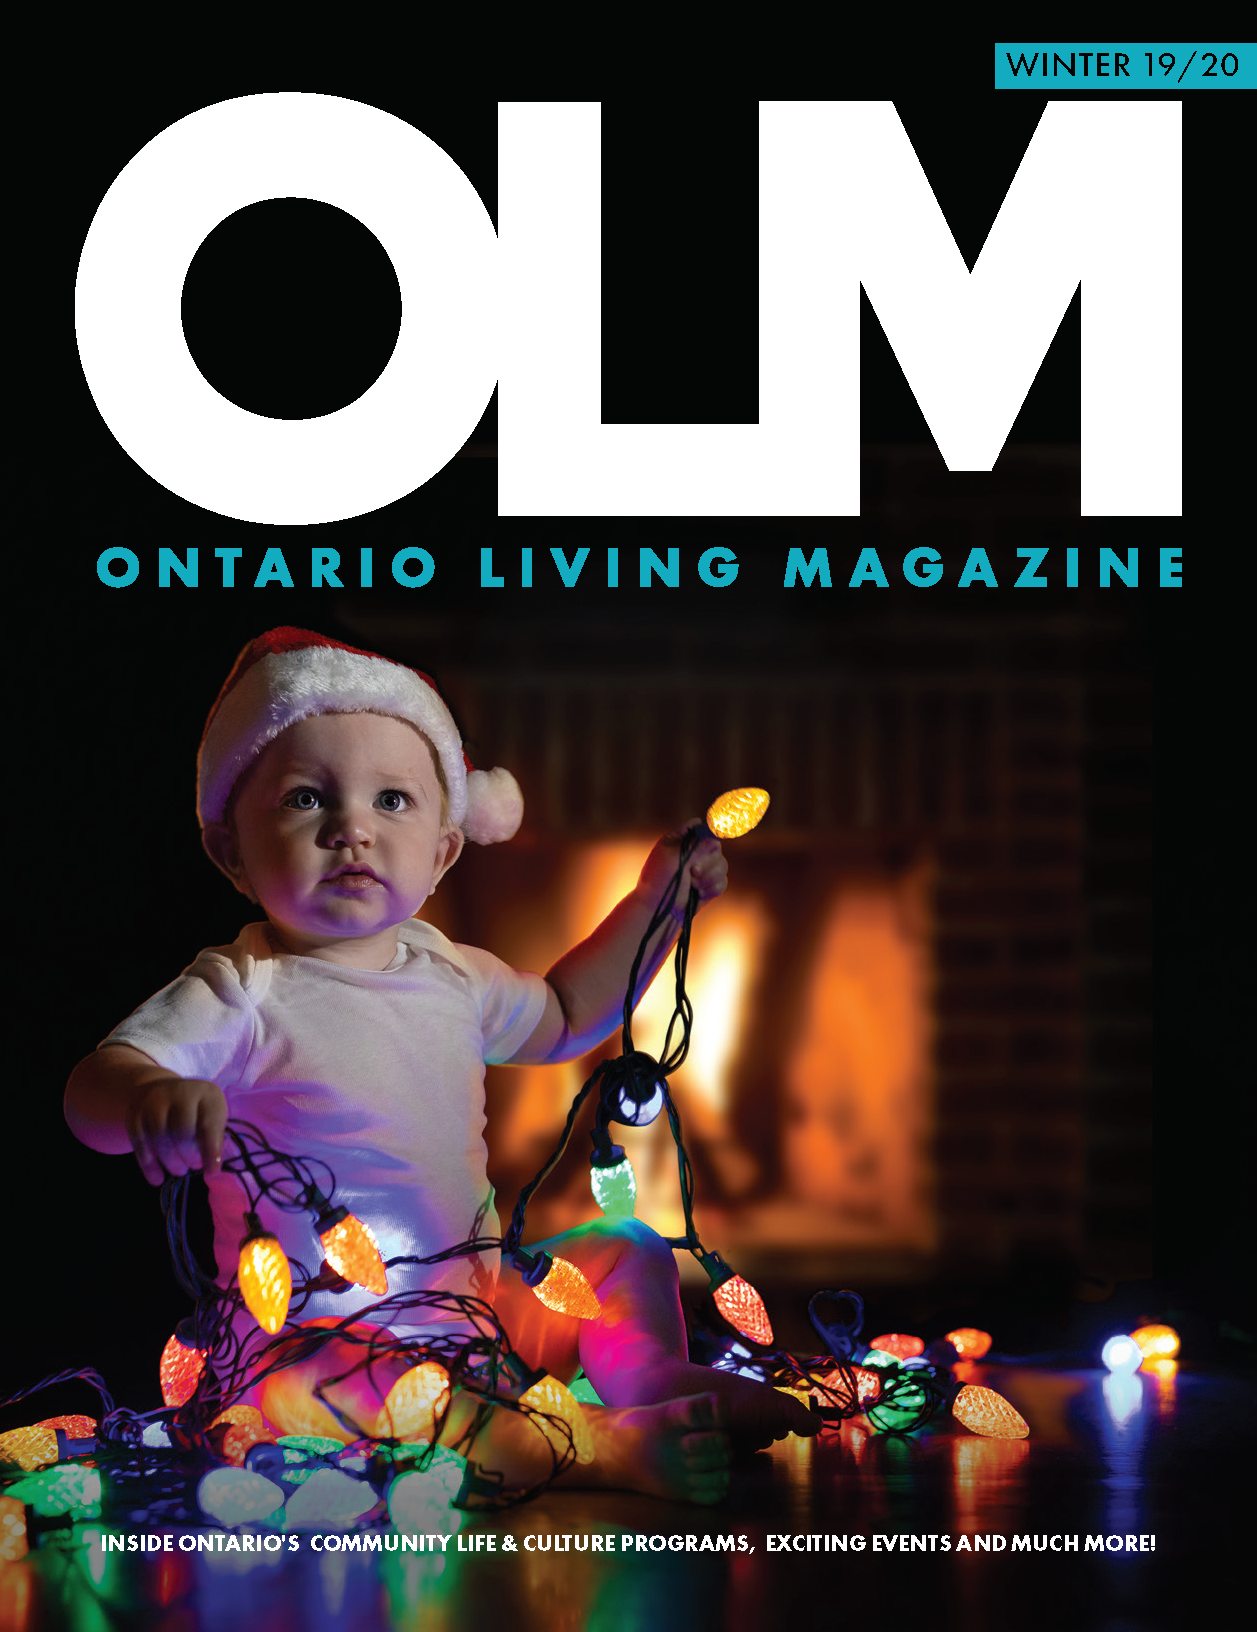 Winter 2019/20 Ontario Living Magazine